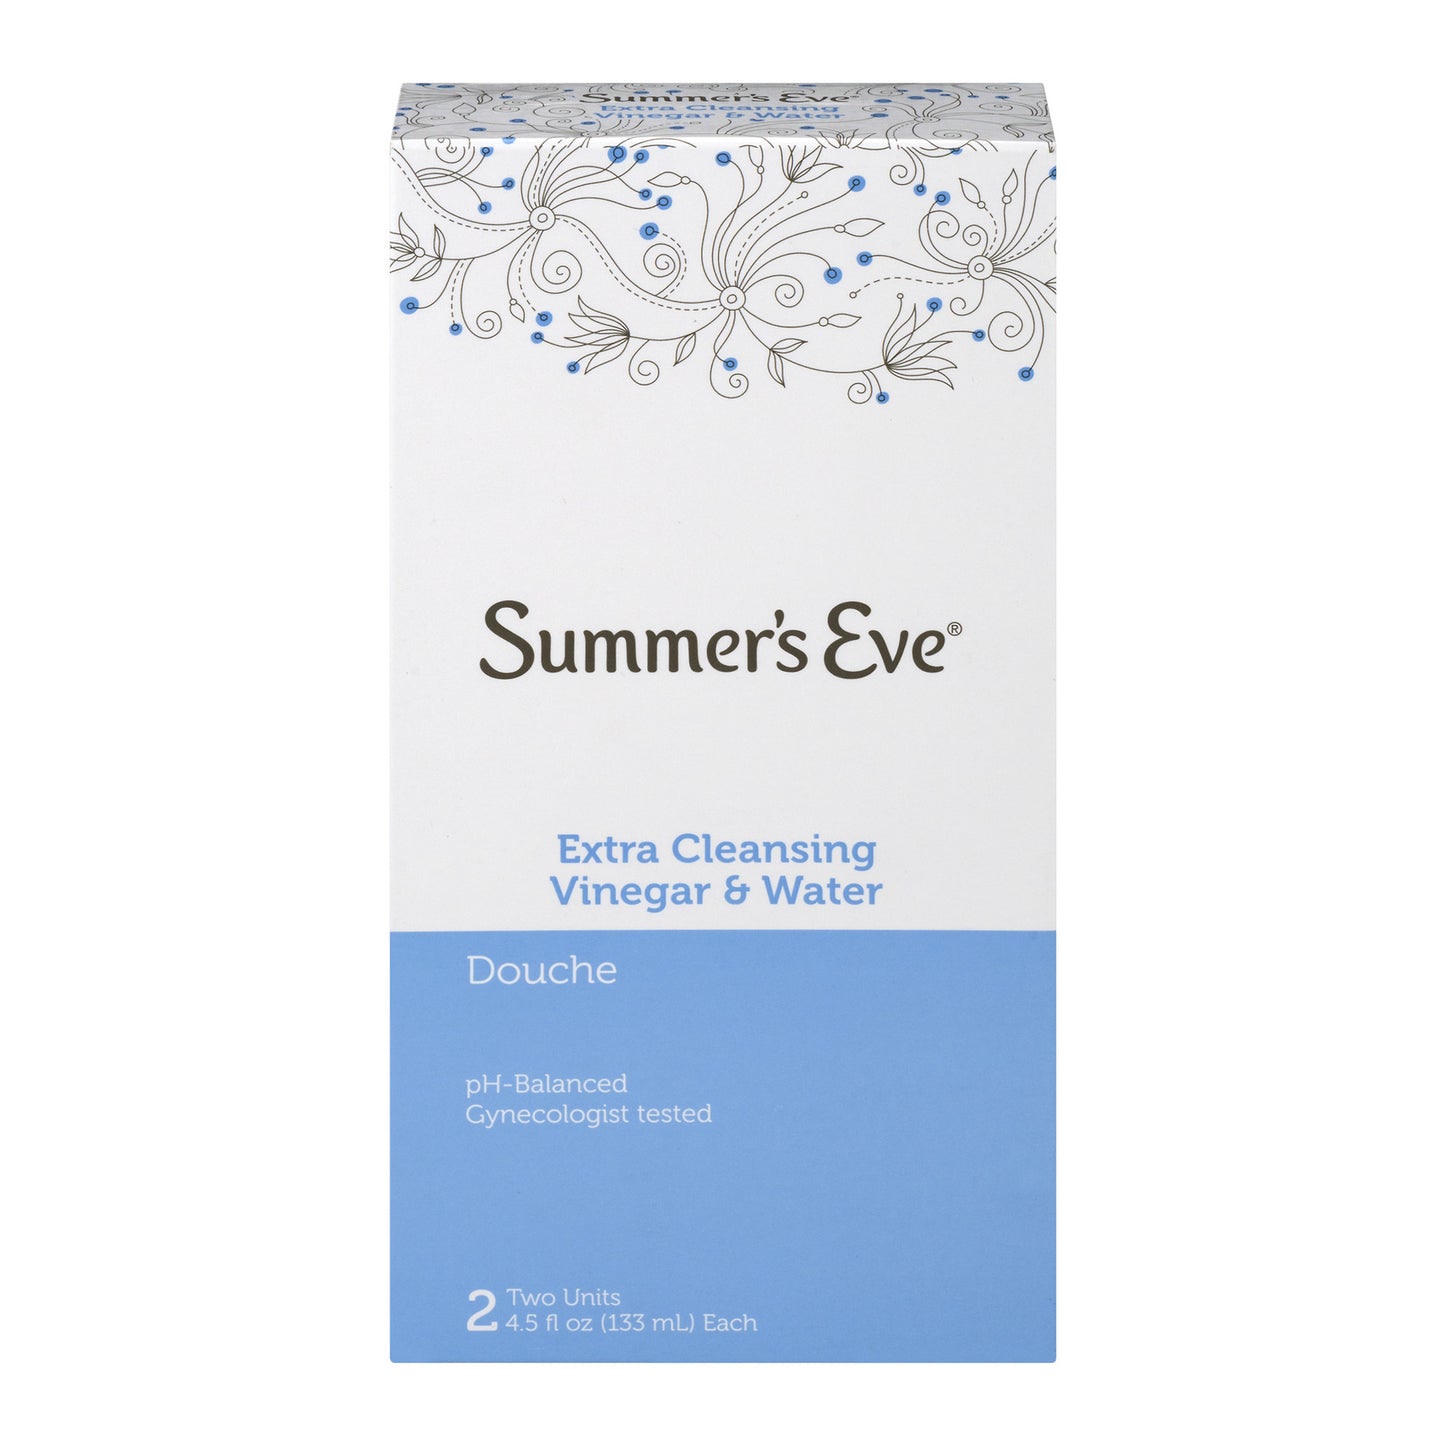 Summer's Eve Extra Cleansing Douche Vinegar & Water - 4.5 Oz | CVS